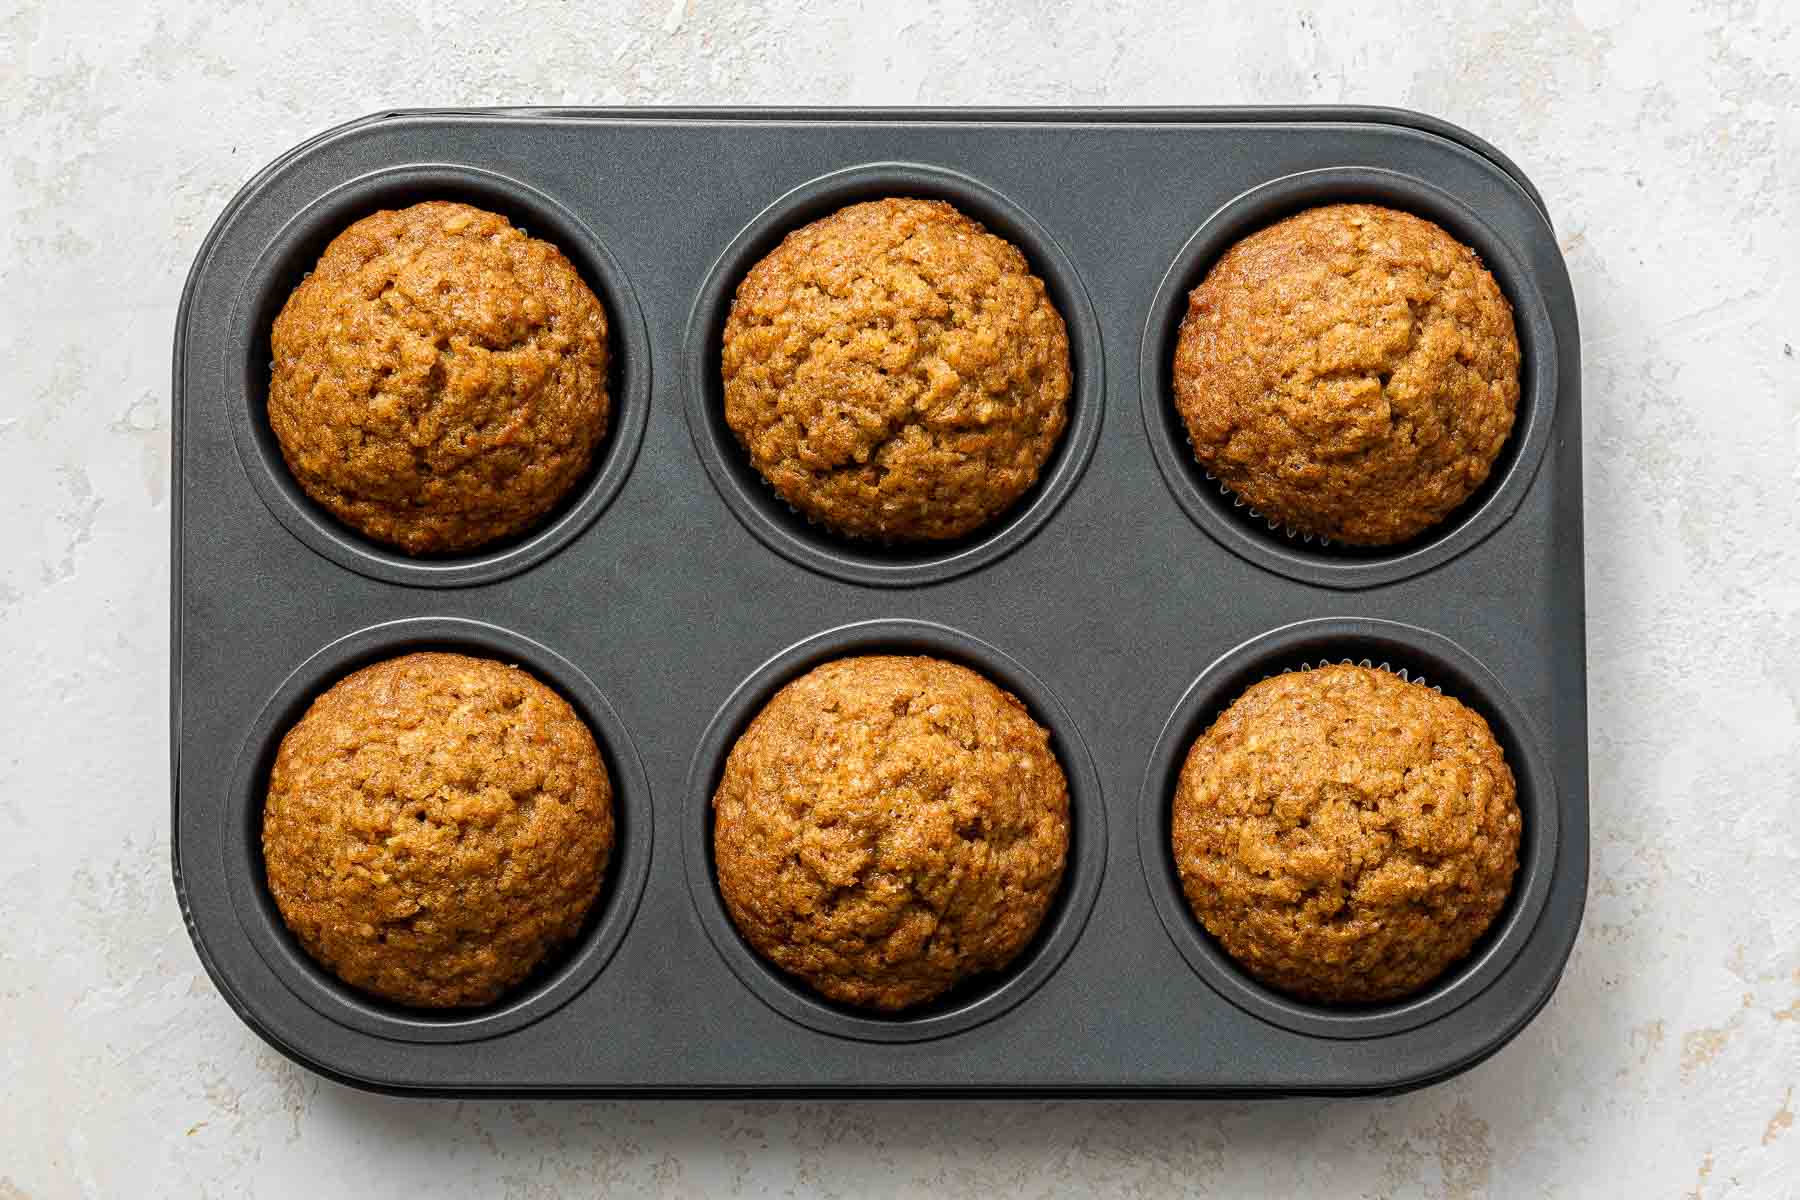 Orange cupcakes cooling in muffin pan.